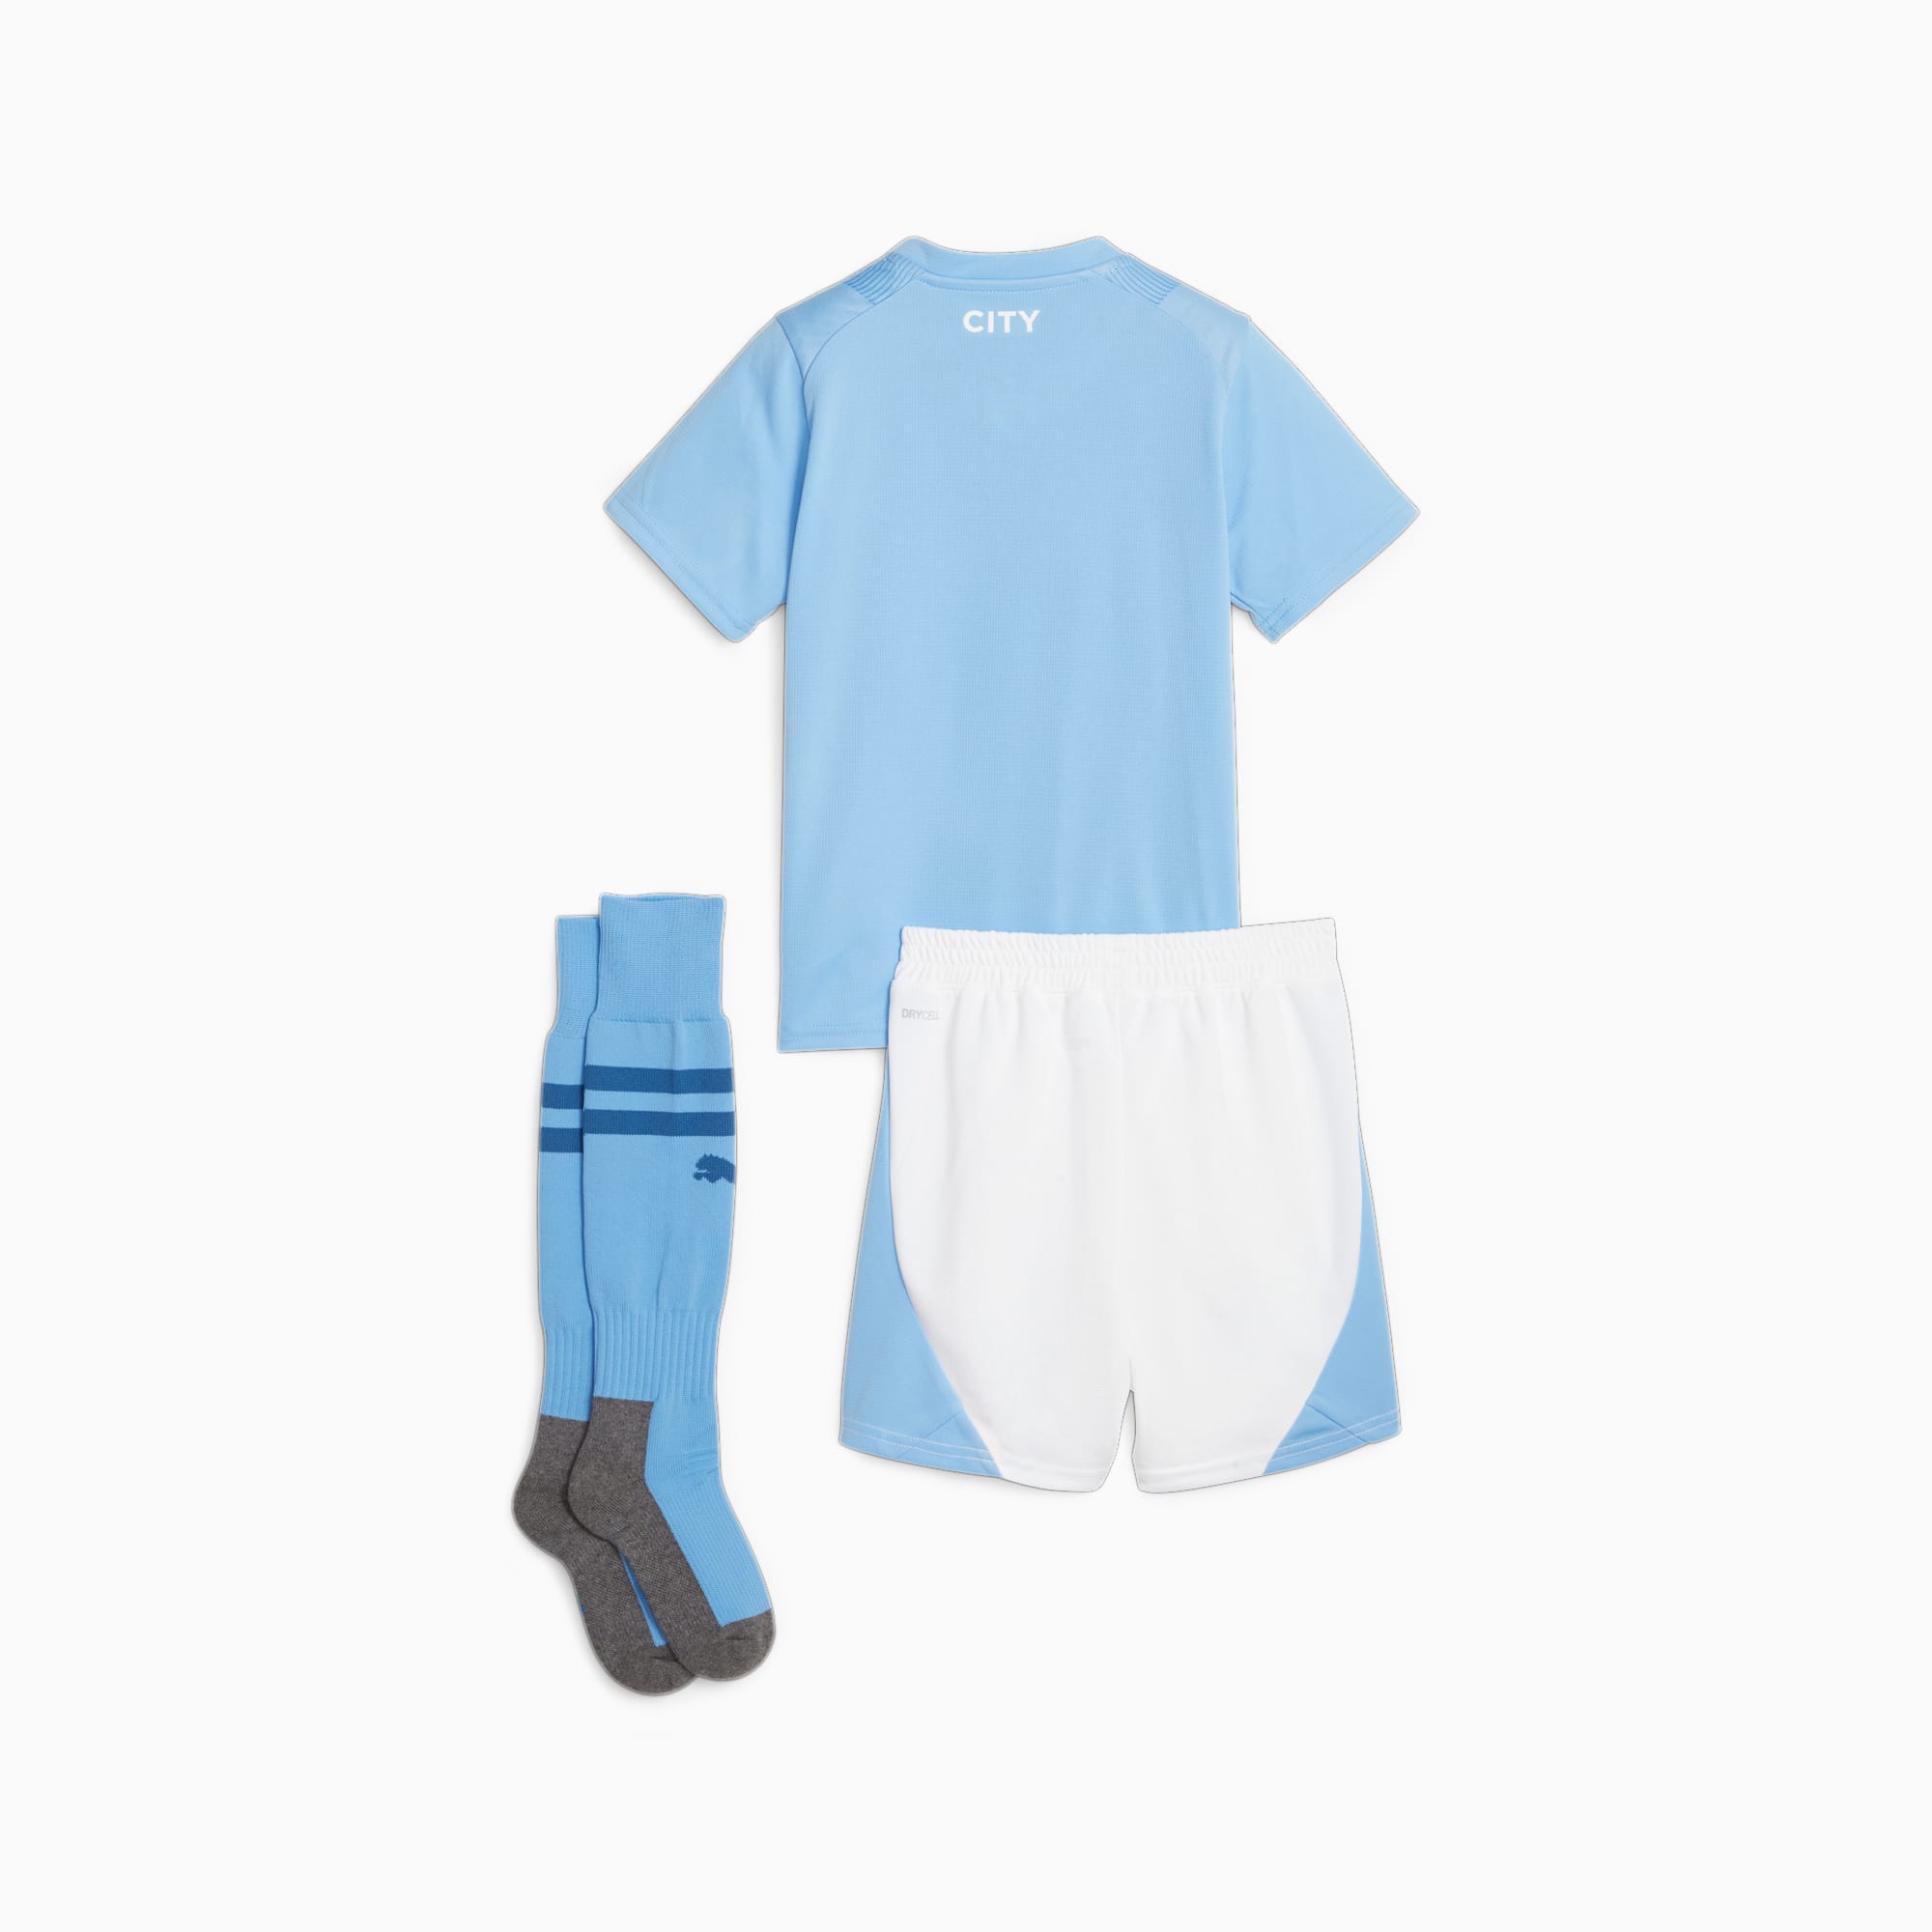 PUMA Manchester City F.C. Home Mini Kit Kinder, Blau/Weiß, Größe: 92, Kleidung